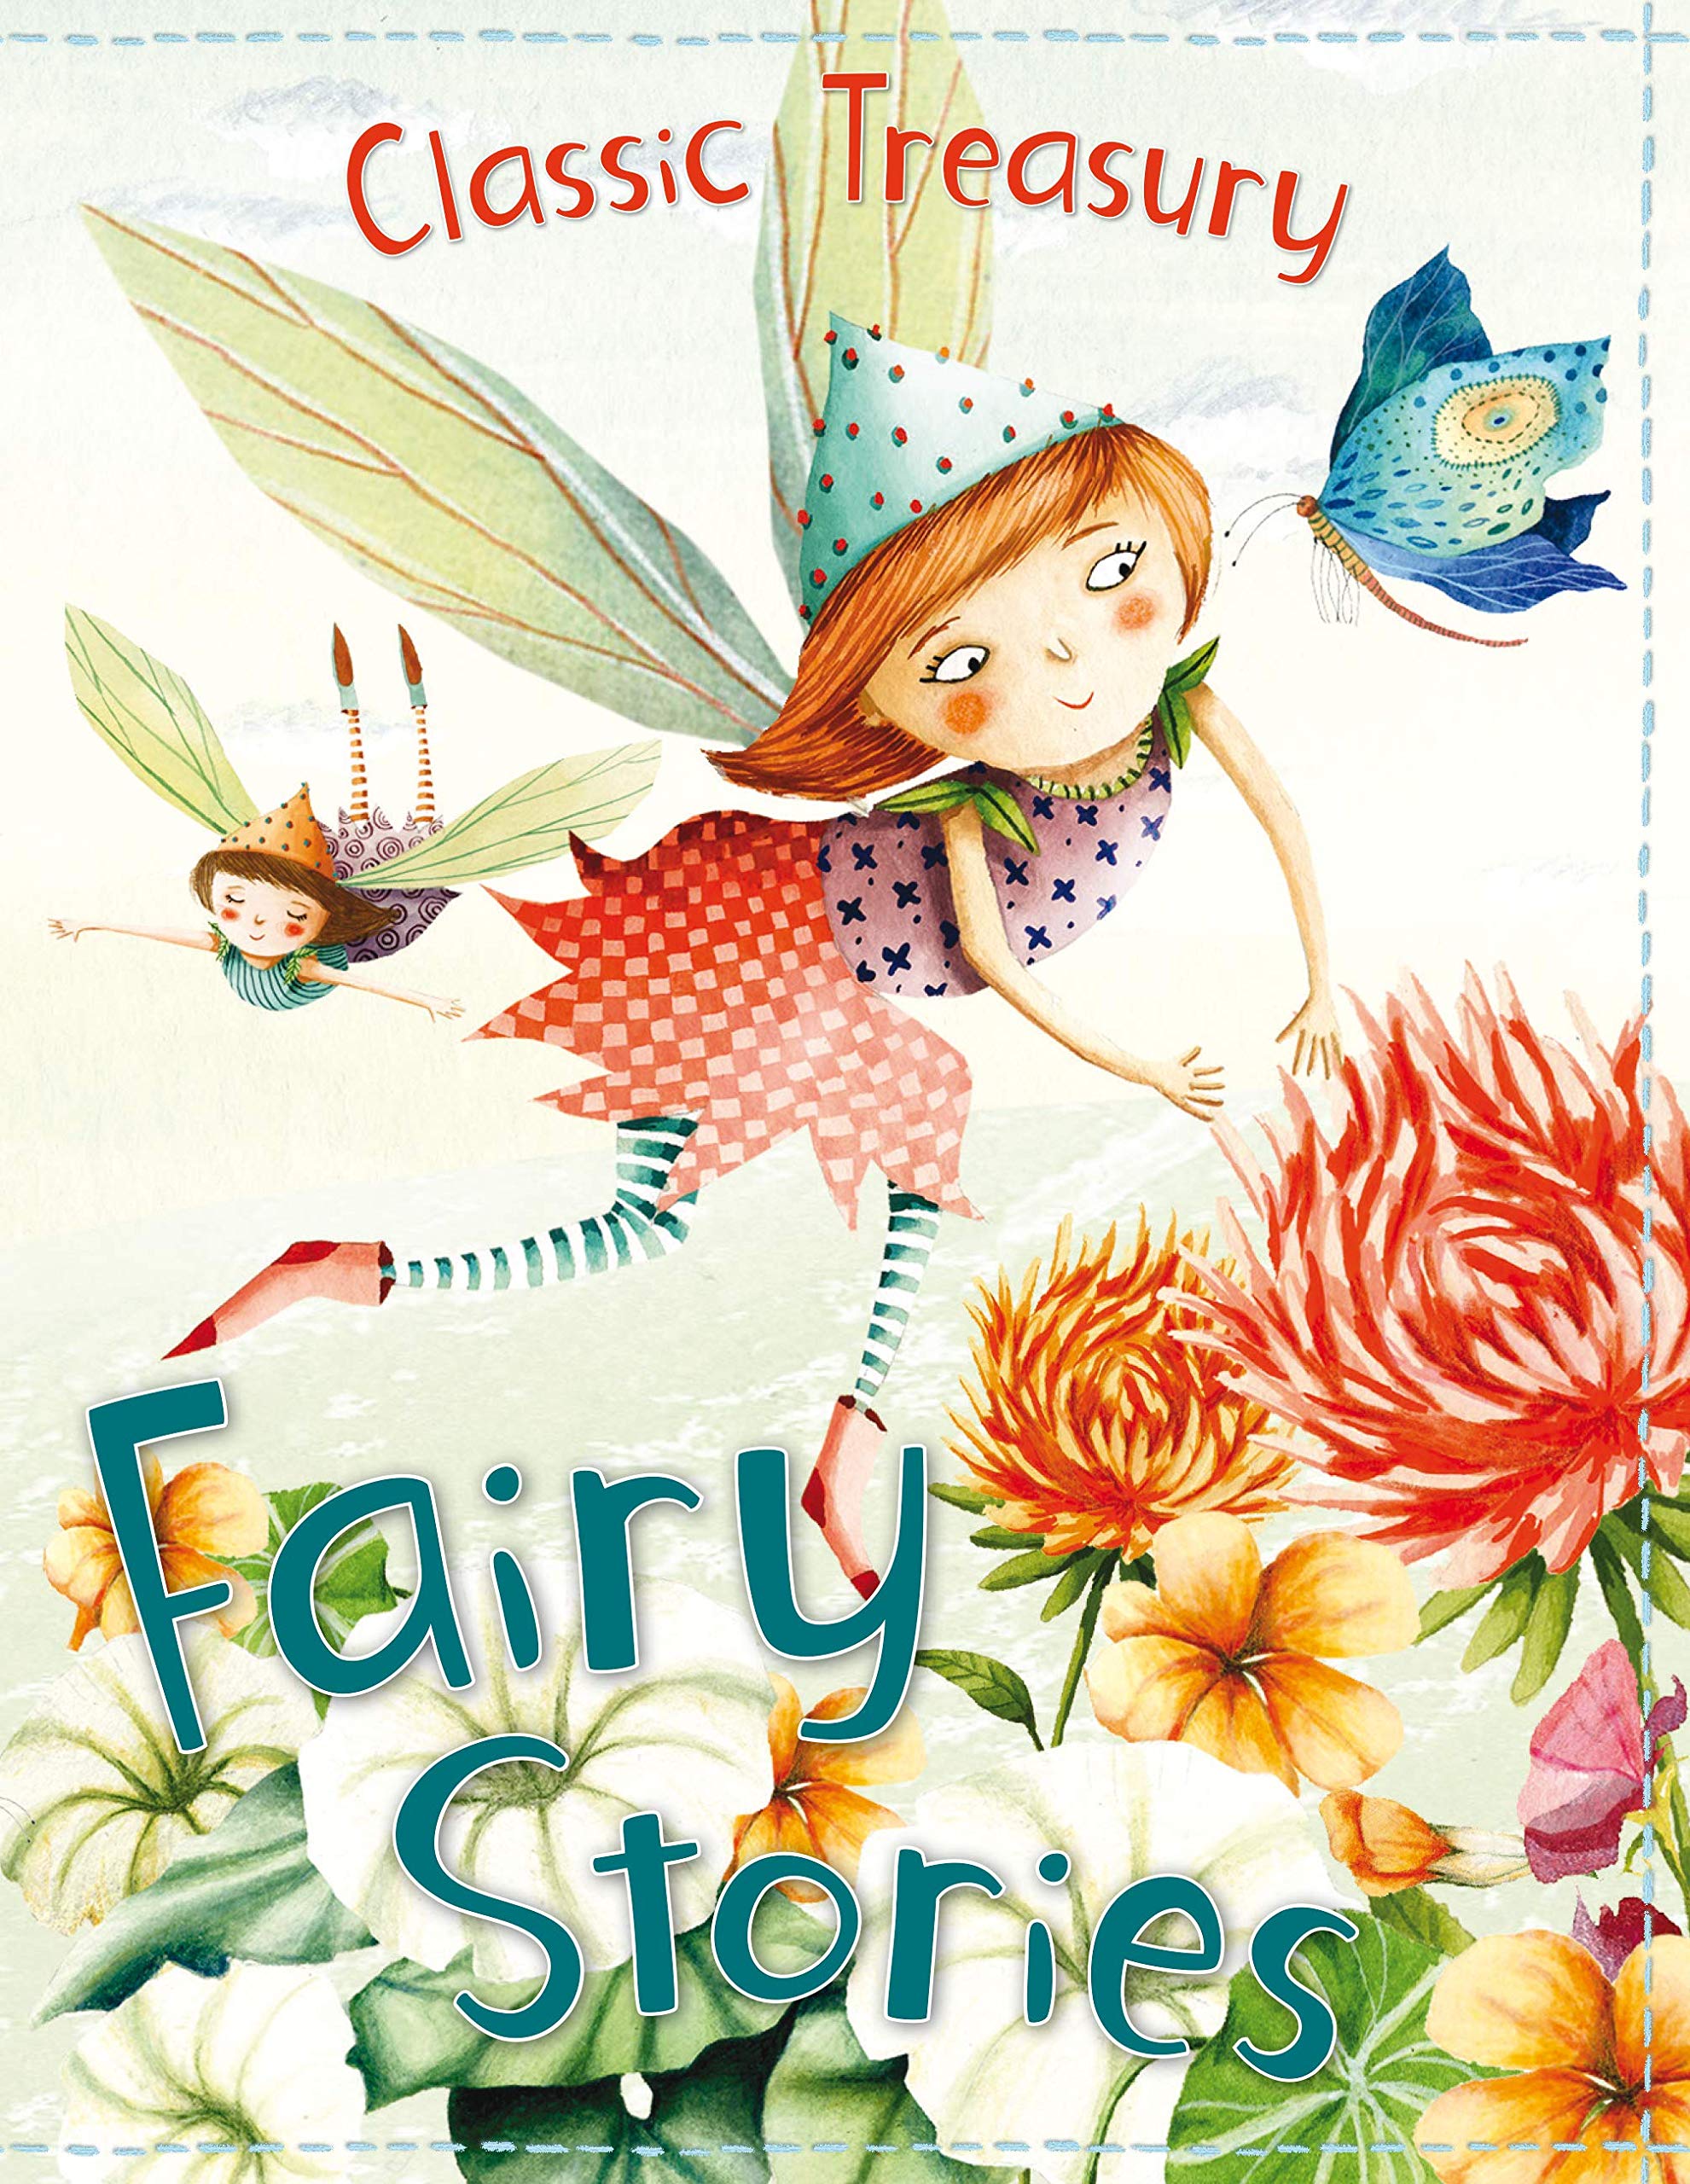 Fairy Stories (Classic Treasury)